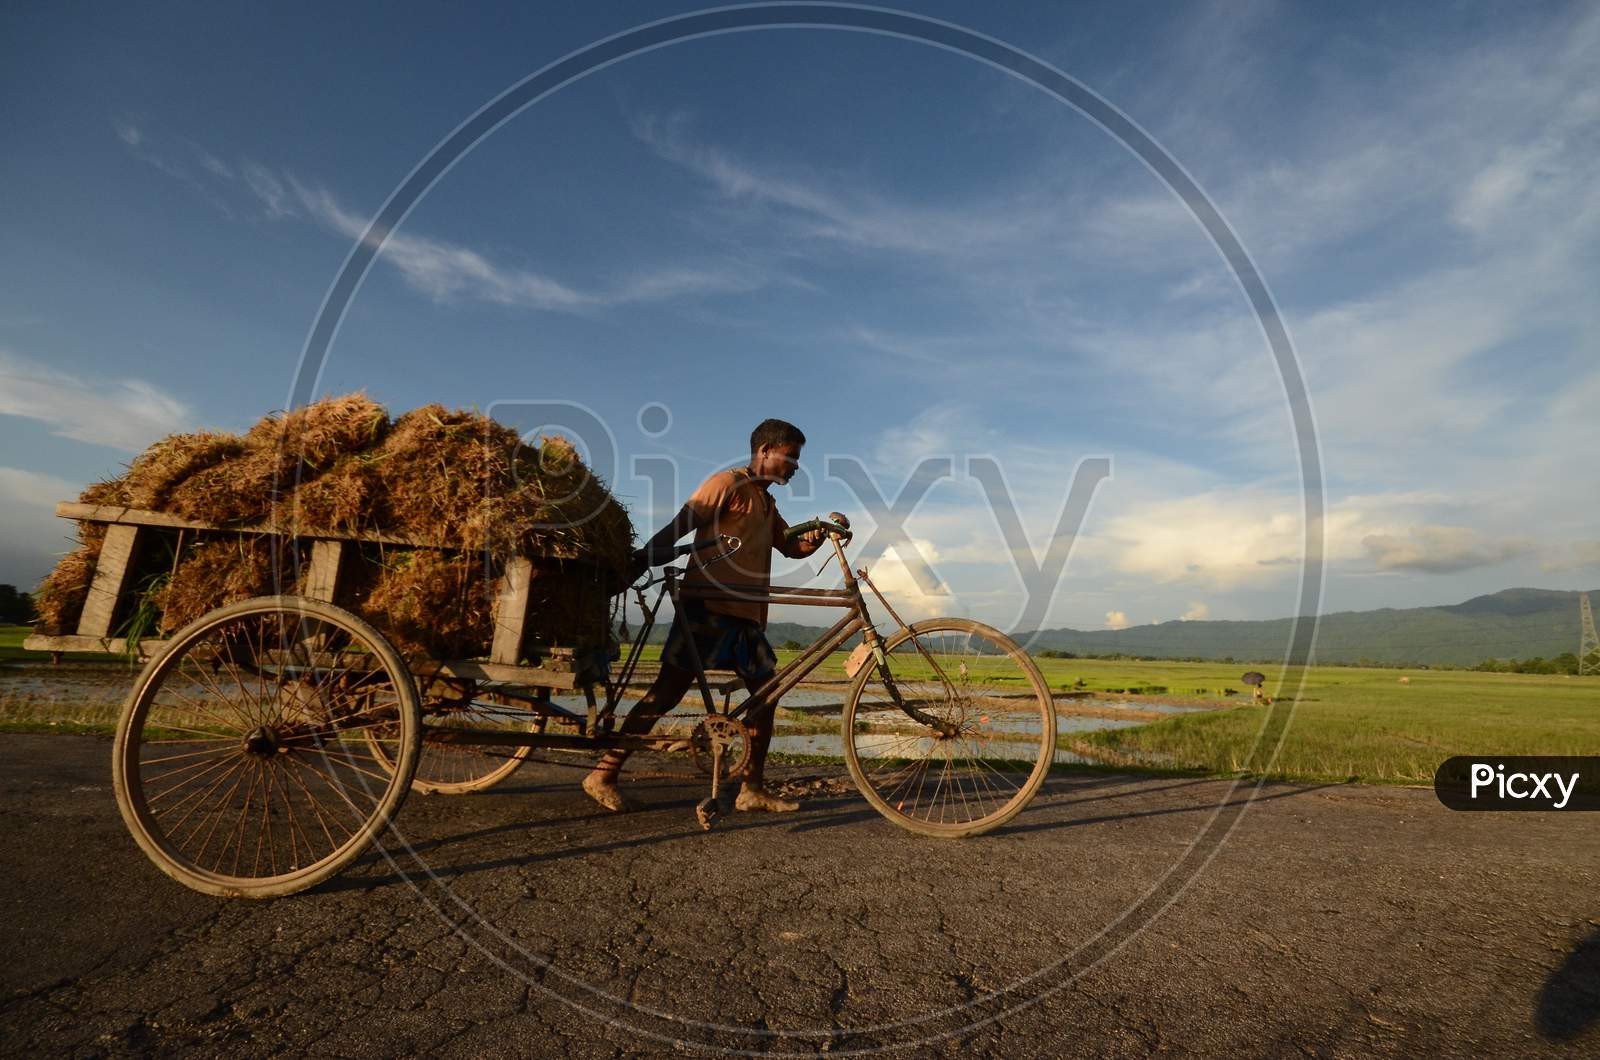 A Farmer Carrying Paddy Sapling Bundles in an Rickshaw At Paddy Fields in Nagaon, Assam